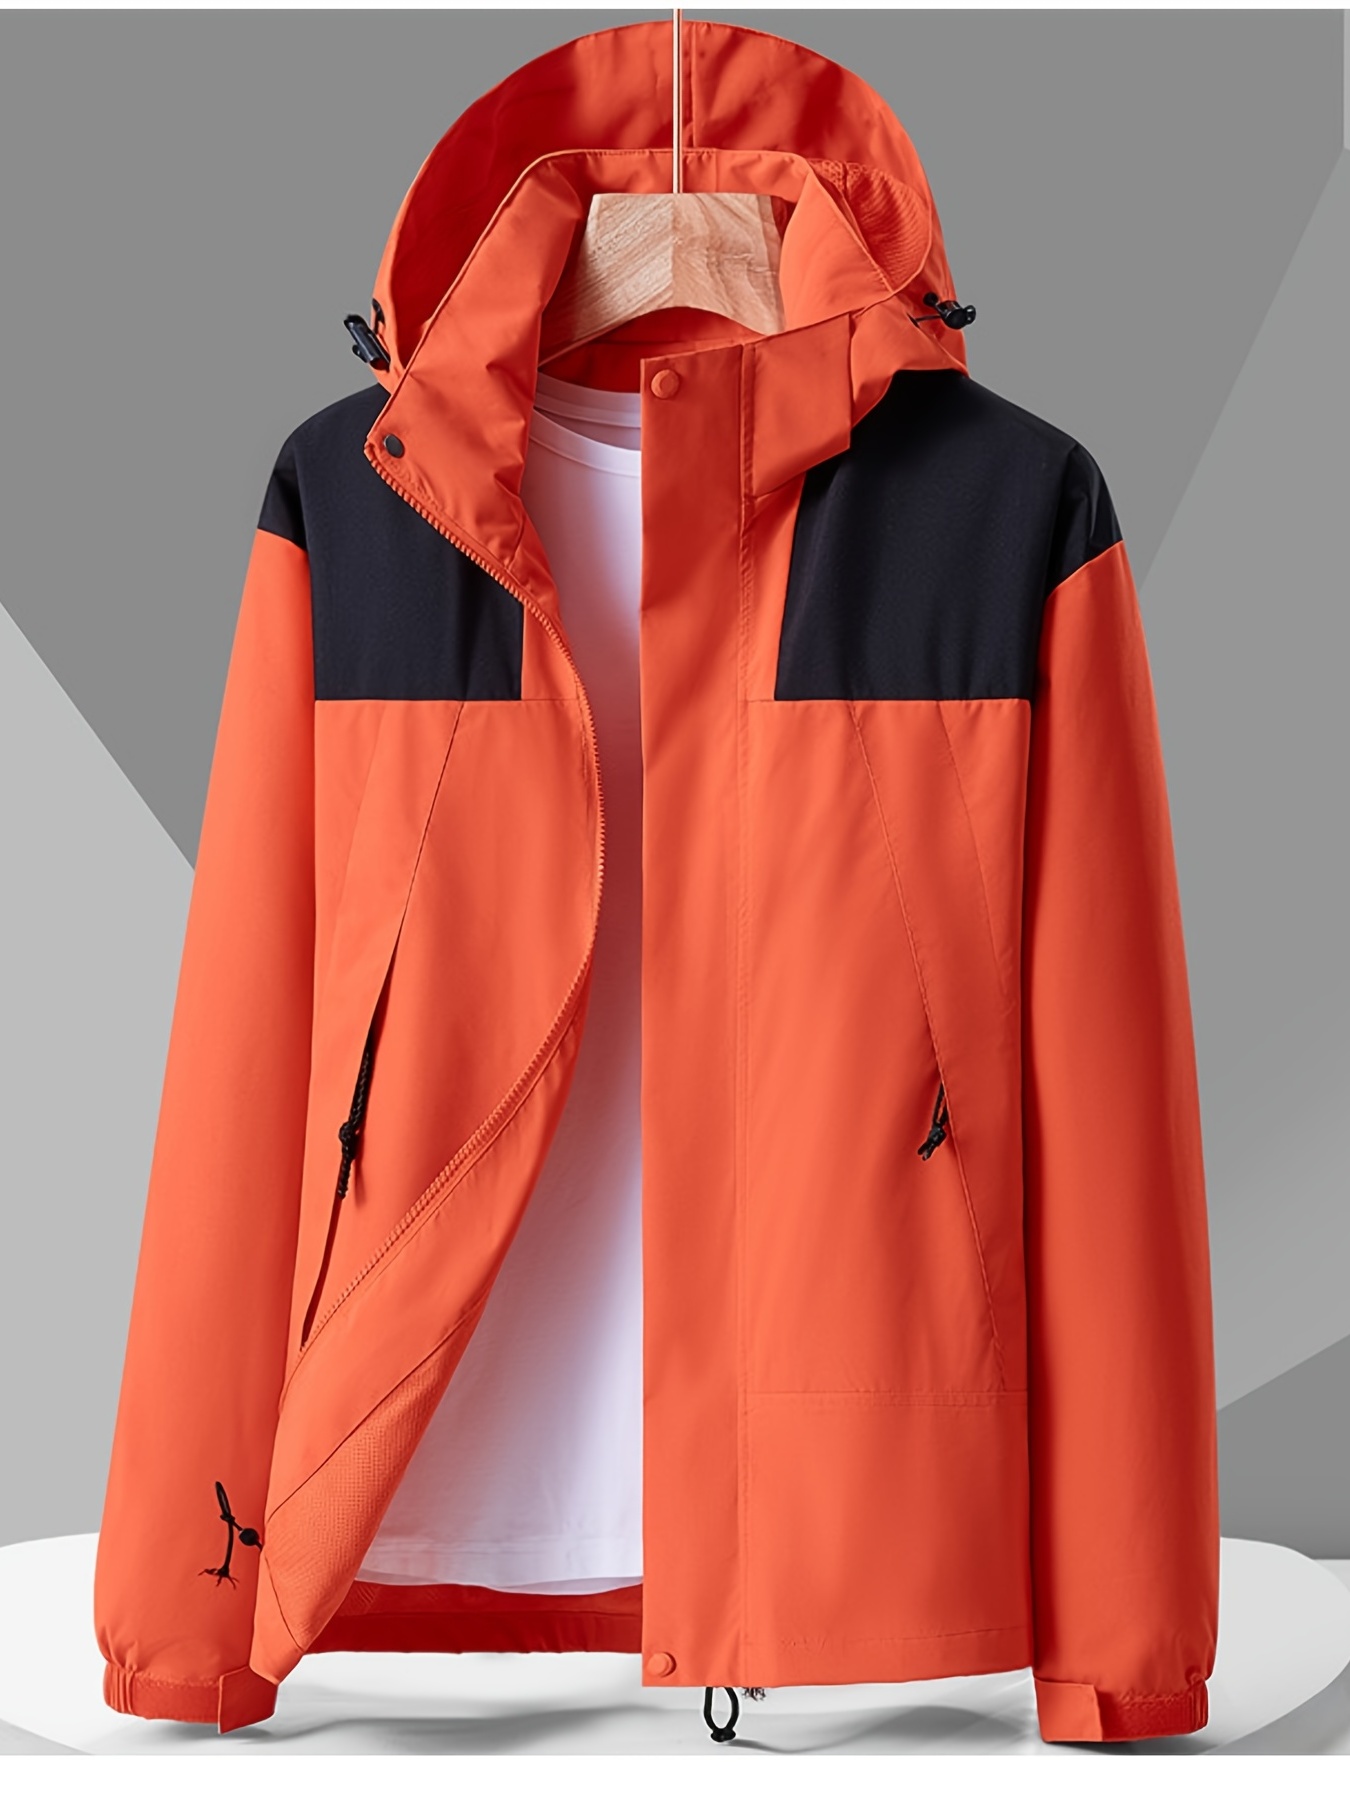 How to buy the perfect waterproof outdoor jacket